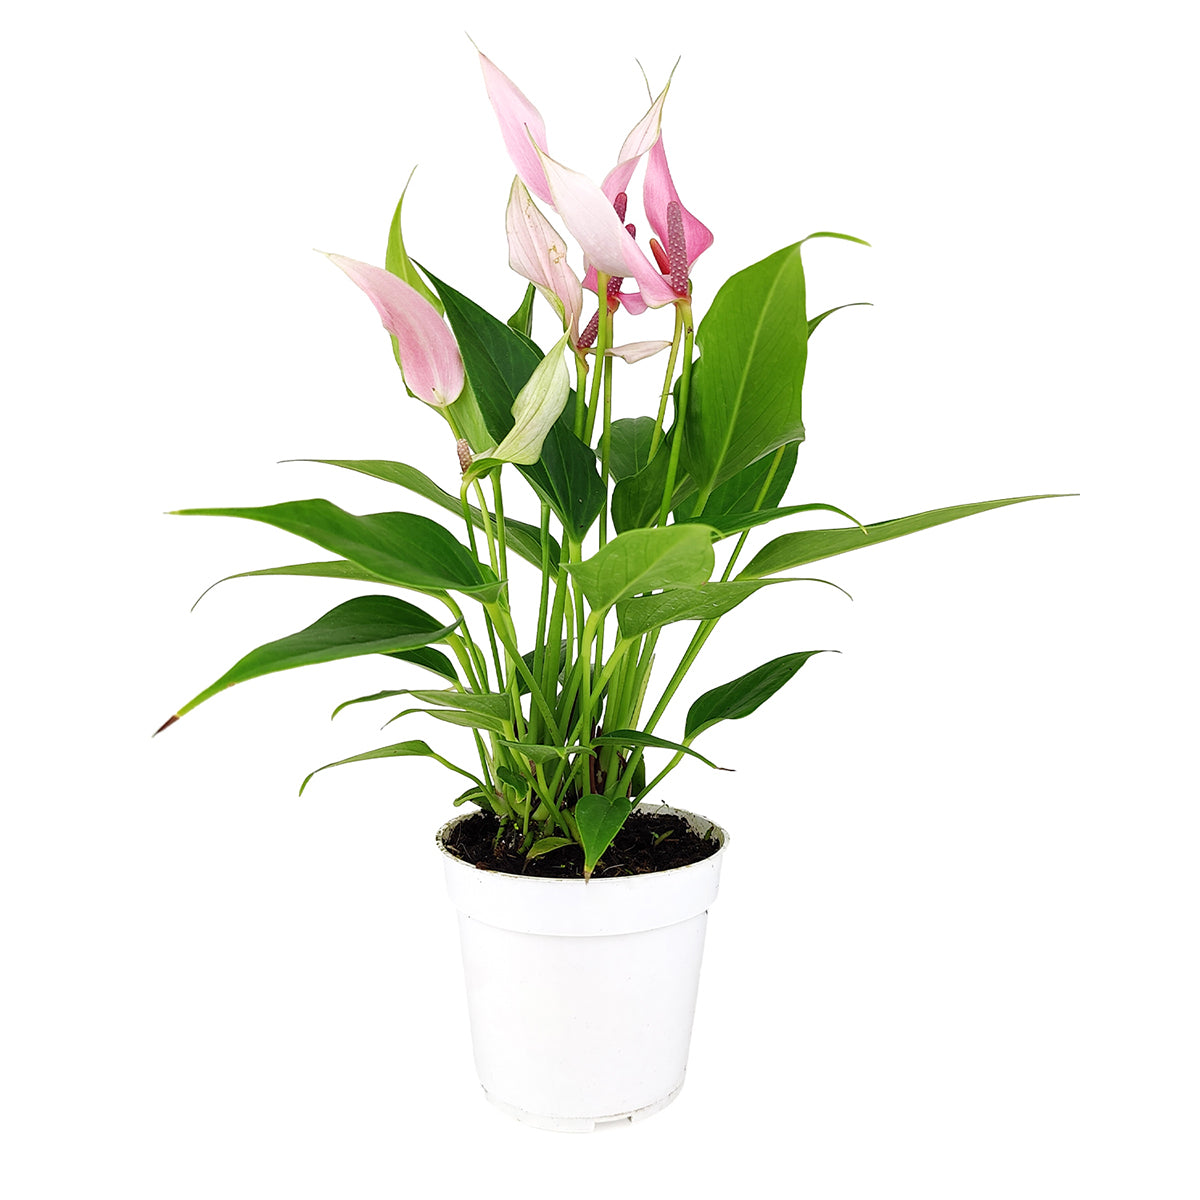 Anthurium Lilli Pink, Anthurium Flowers, Flowering Houseplants, Colorful Flowering Houseplants, Indoor Houseplants, Air Purifying Houseplant, Best Plants for Beginners